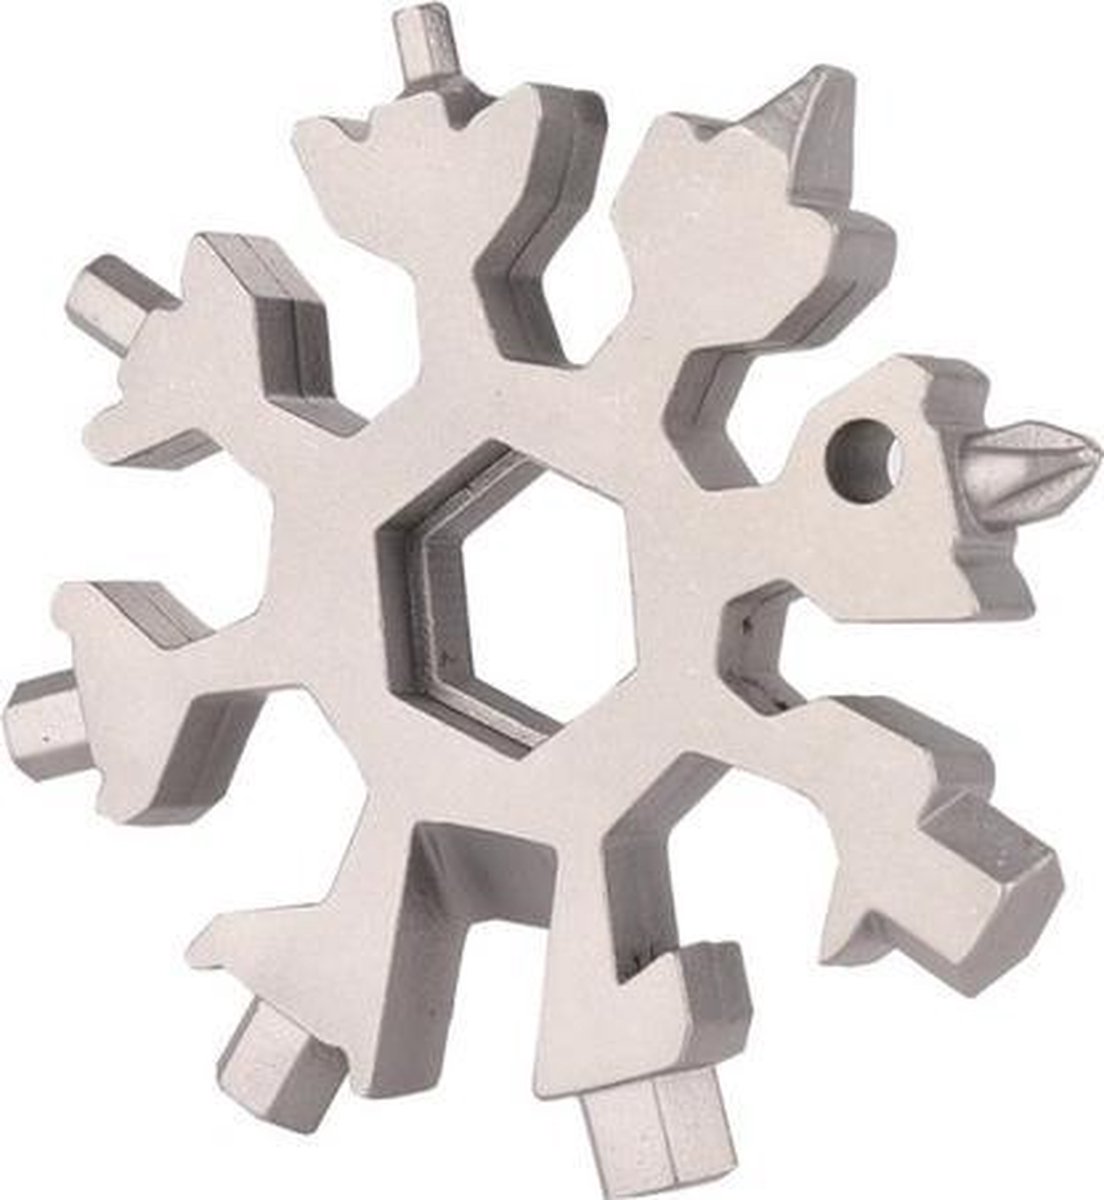 18-in-1 Multi tool Portable Outdoor Octagonal Snowflake EDC Tool 